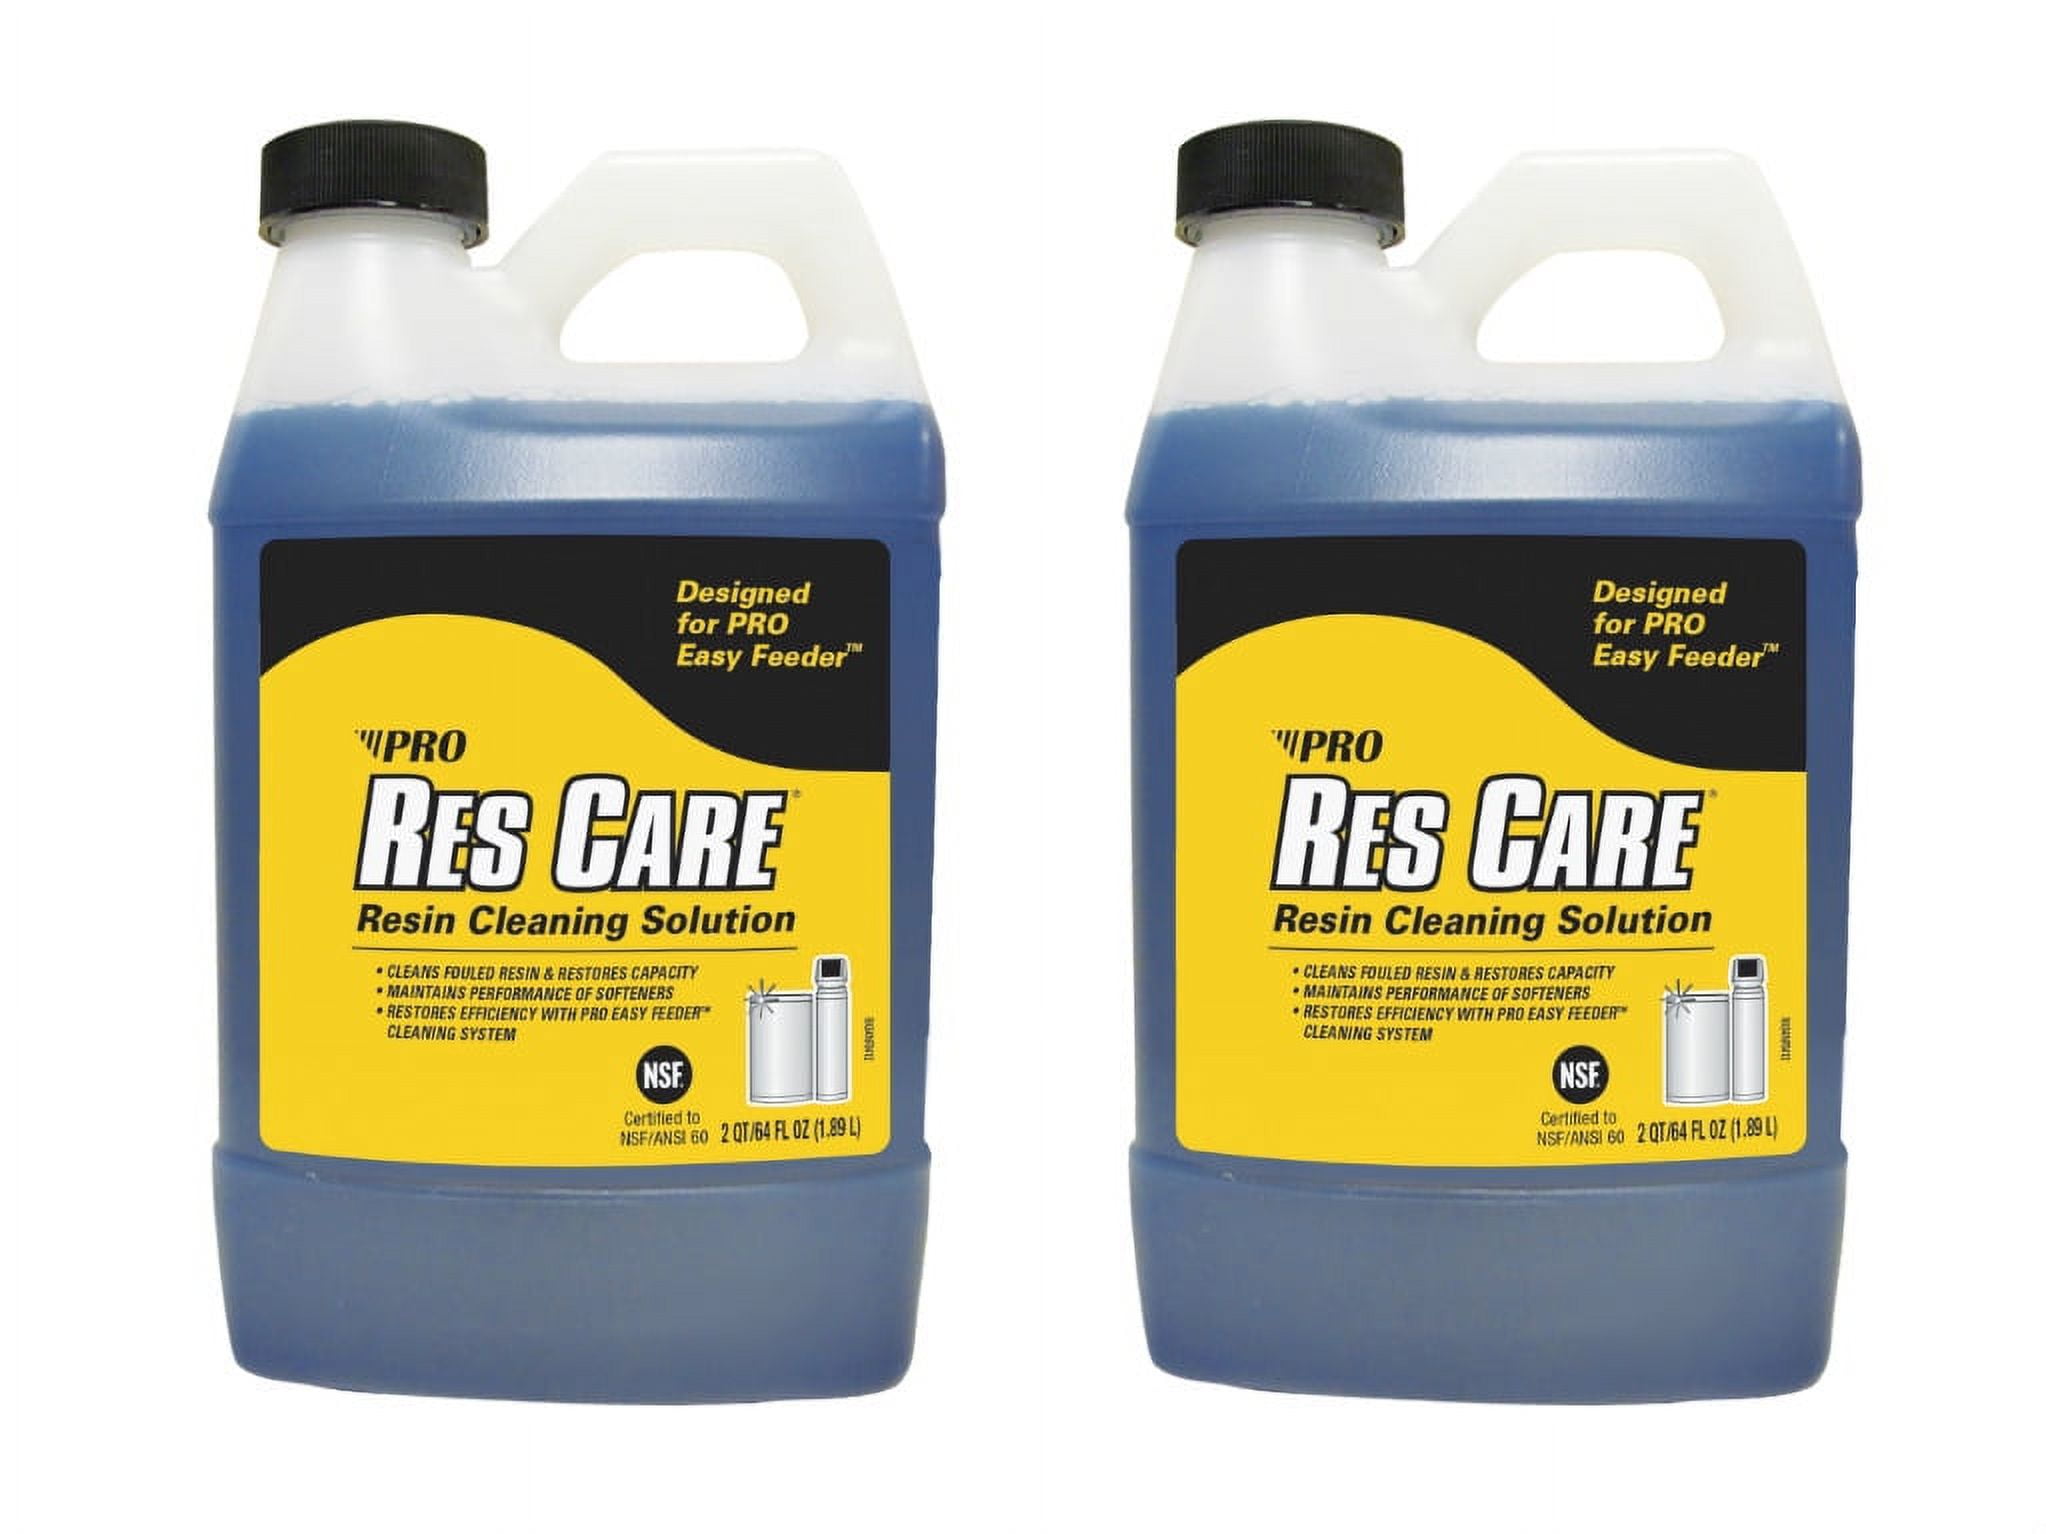 ResCare RK02B All-Purpose Water Softener Cleaner Liquid Refill, 1 Gallon, 3  Pack